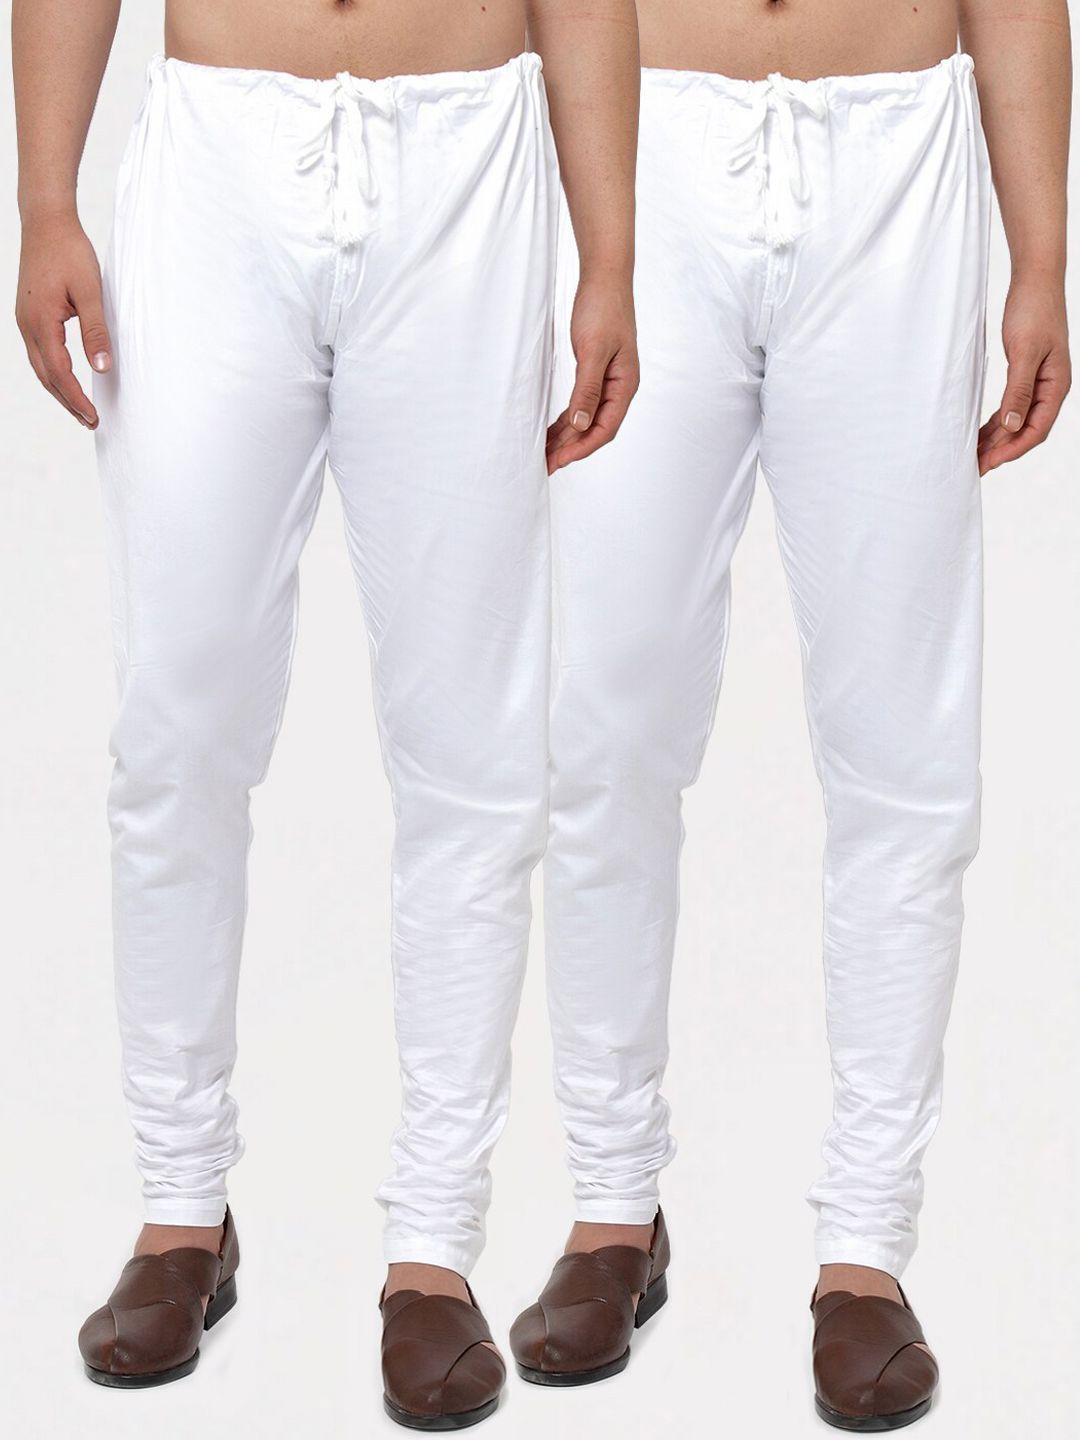 klotthe men pack of 2 white solid cotton pyjamas